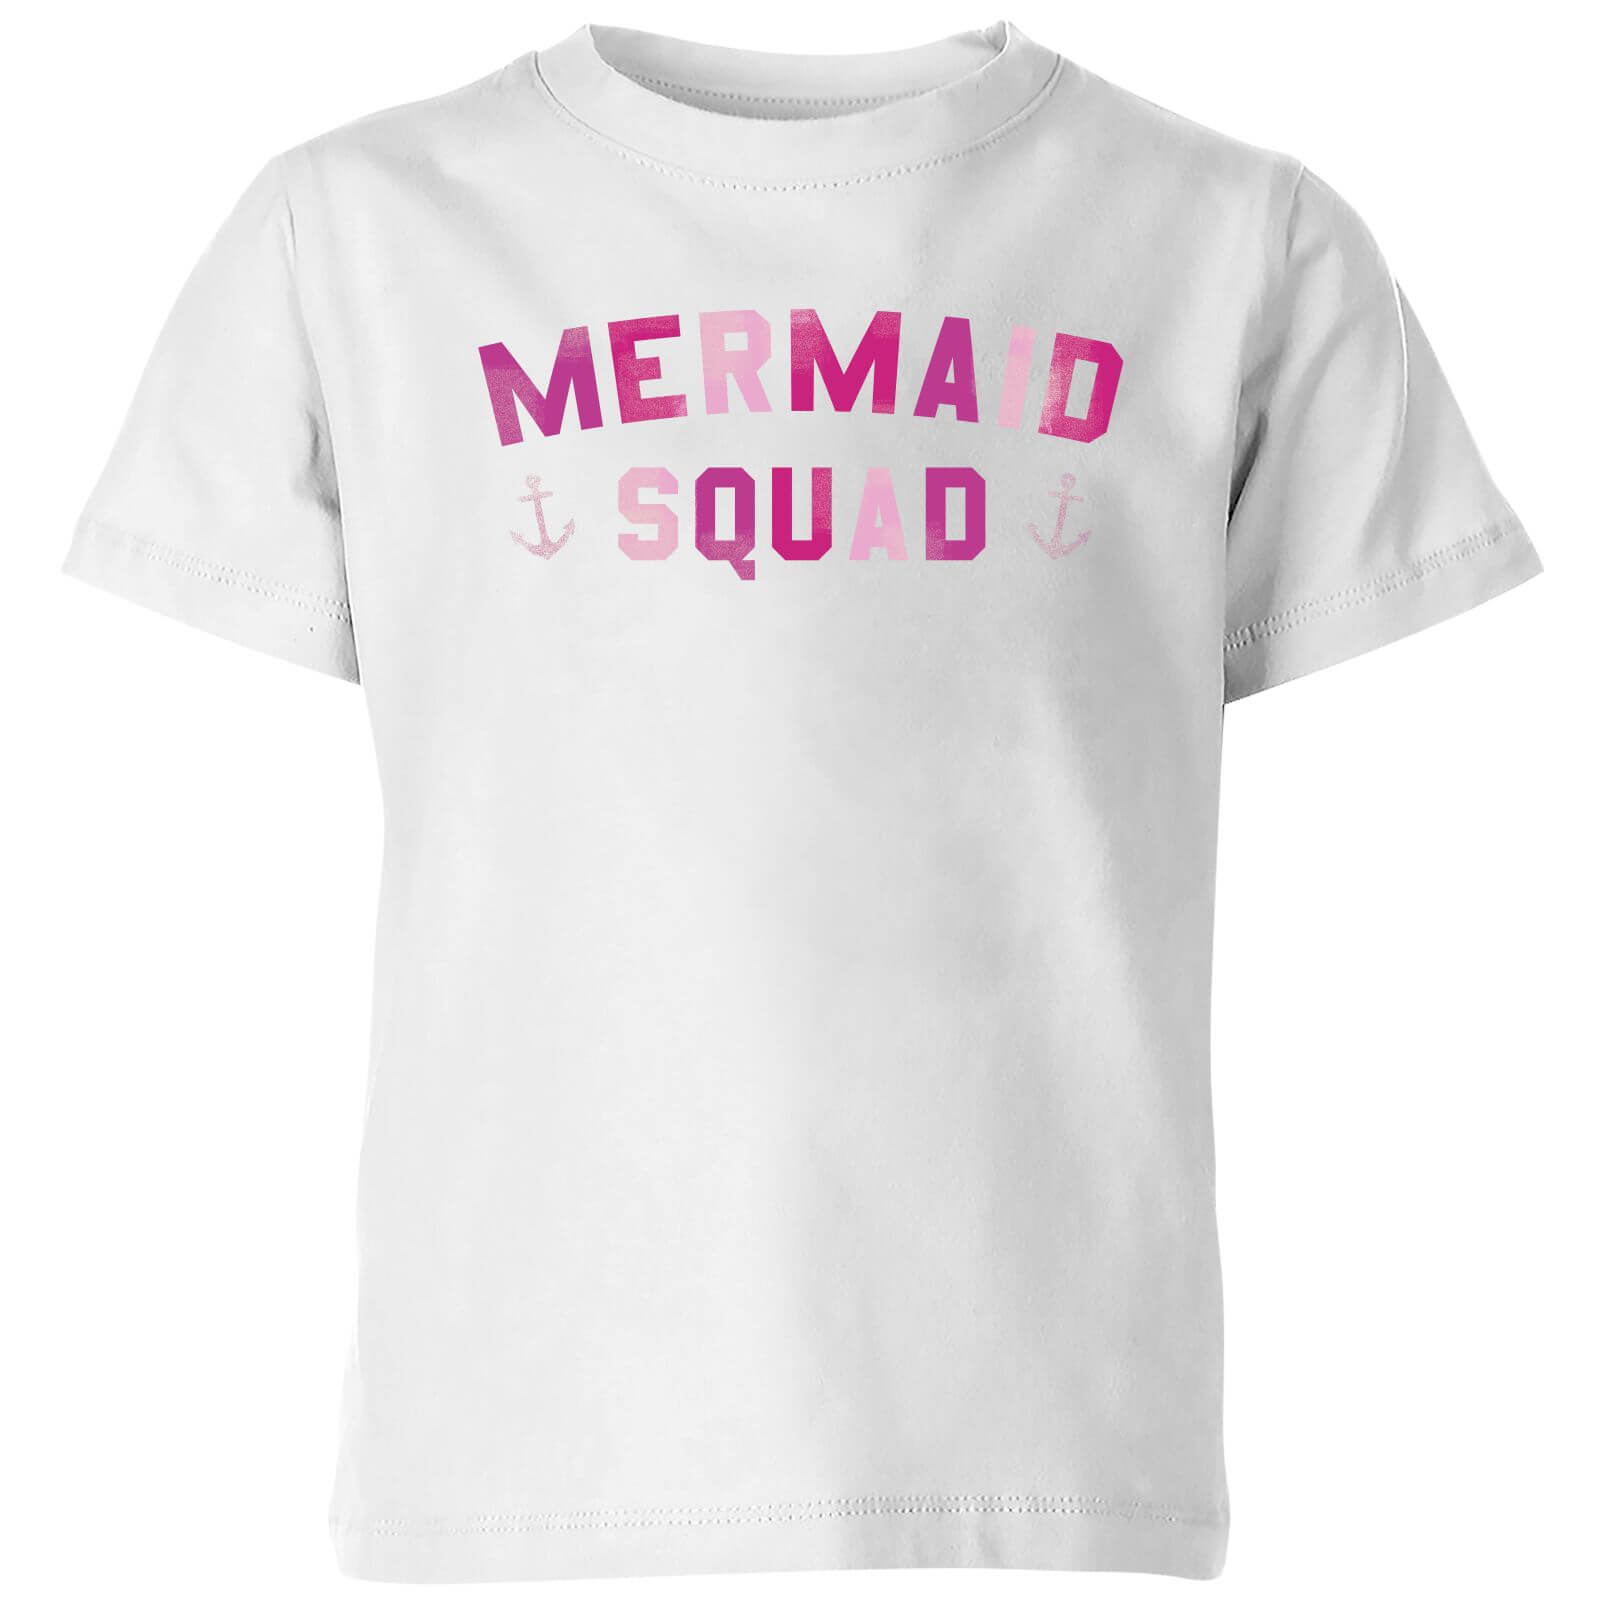 My Little Rascal Mermaid Squad Kids' T-Shirt - White - 3-4 Years - White